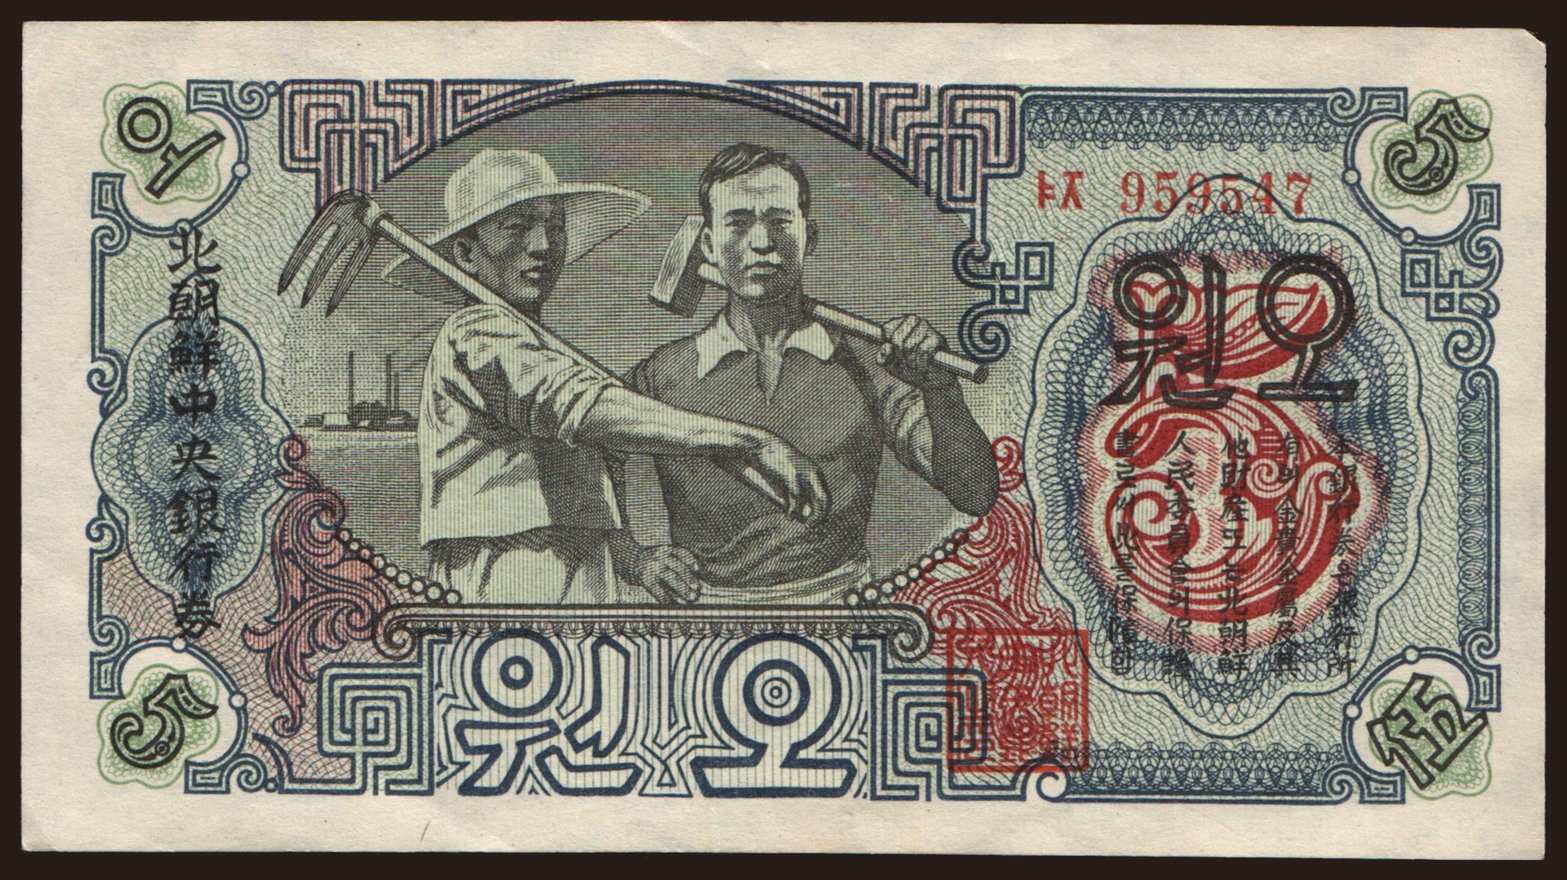 5 won, 1947